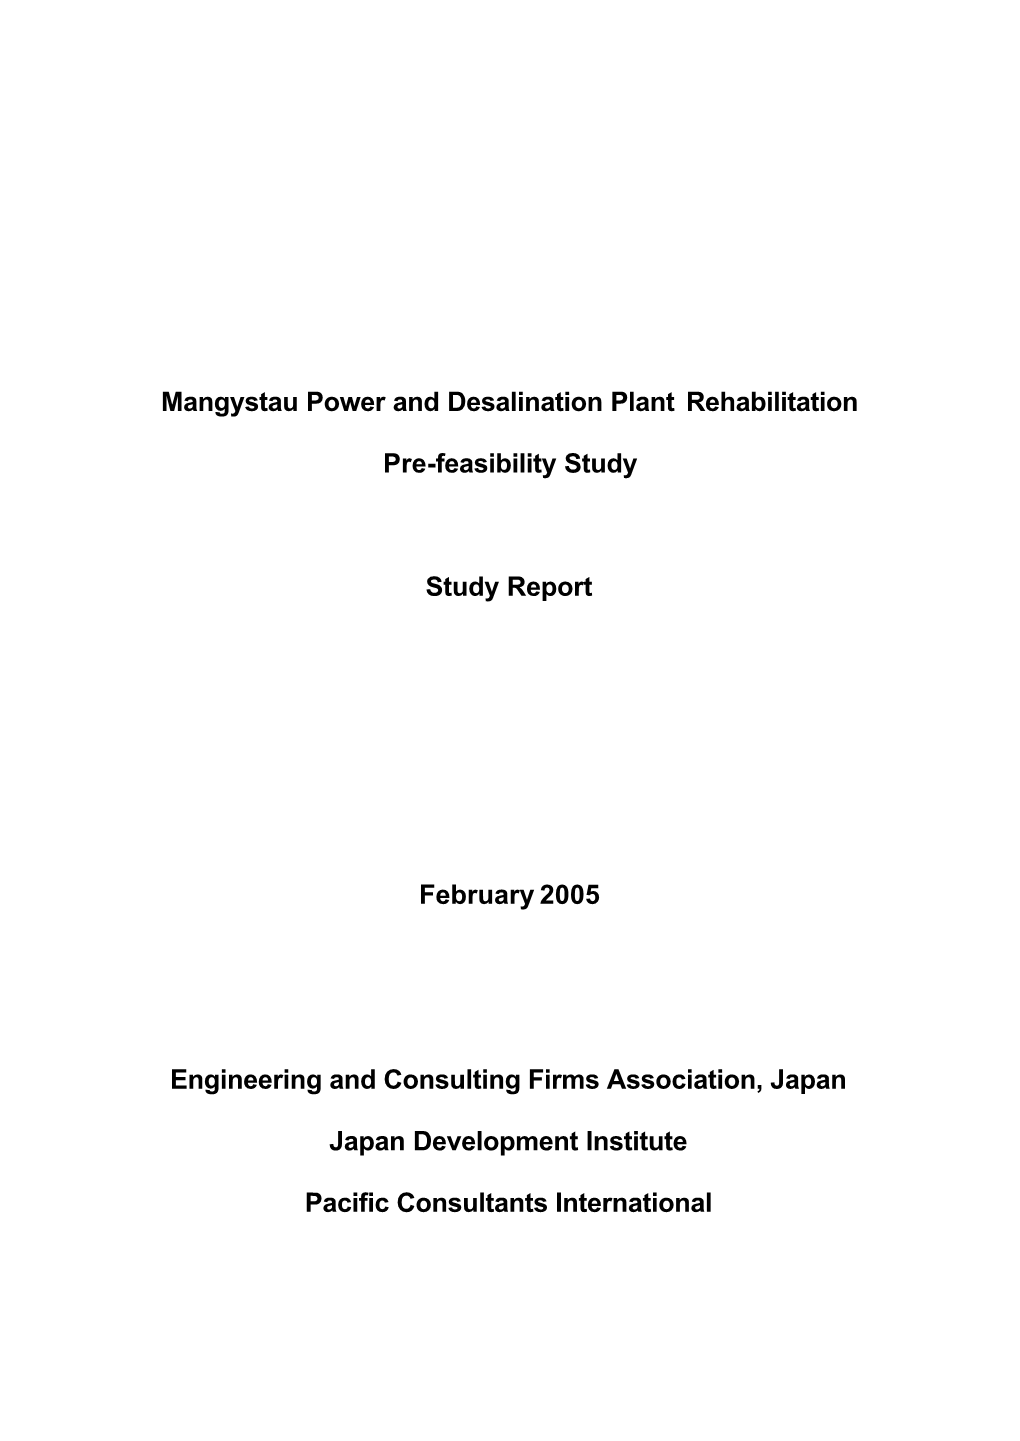 Mangystau Power and Desalination Plant Rehabilitation Pre-Feasibility